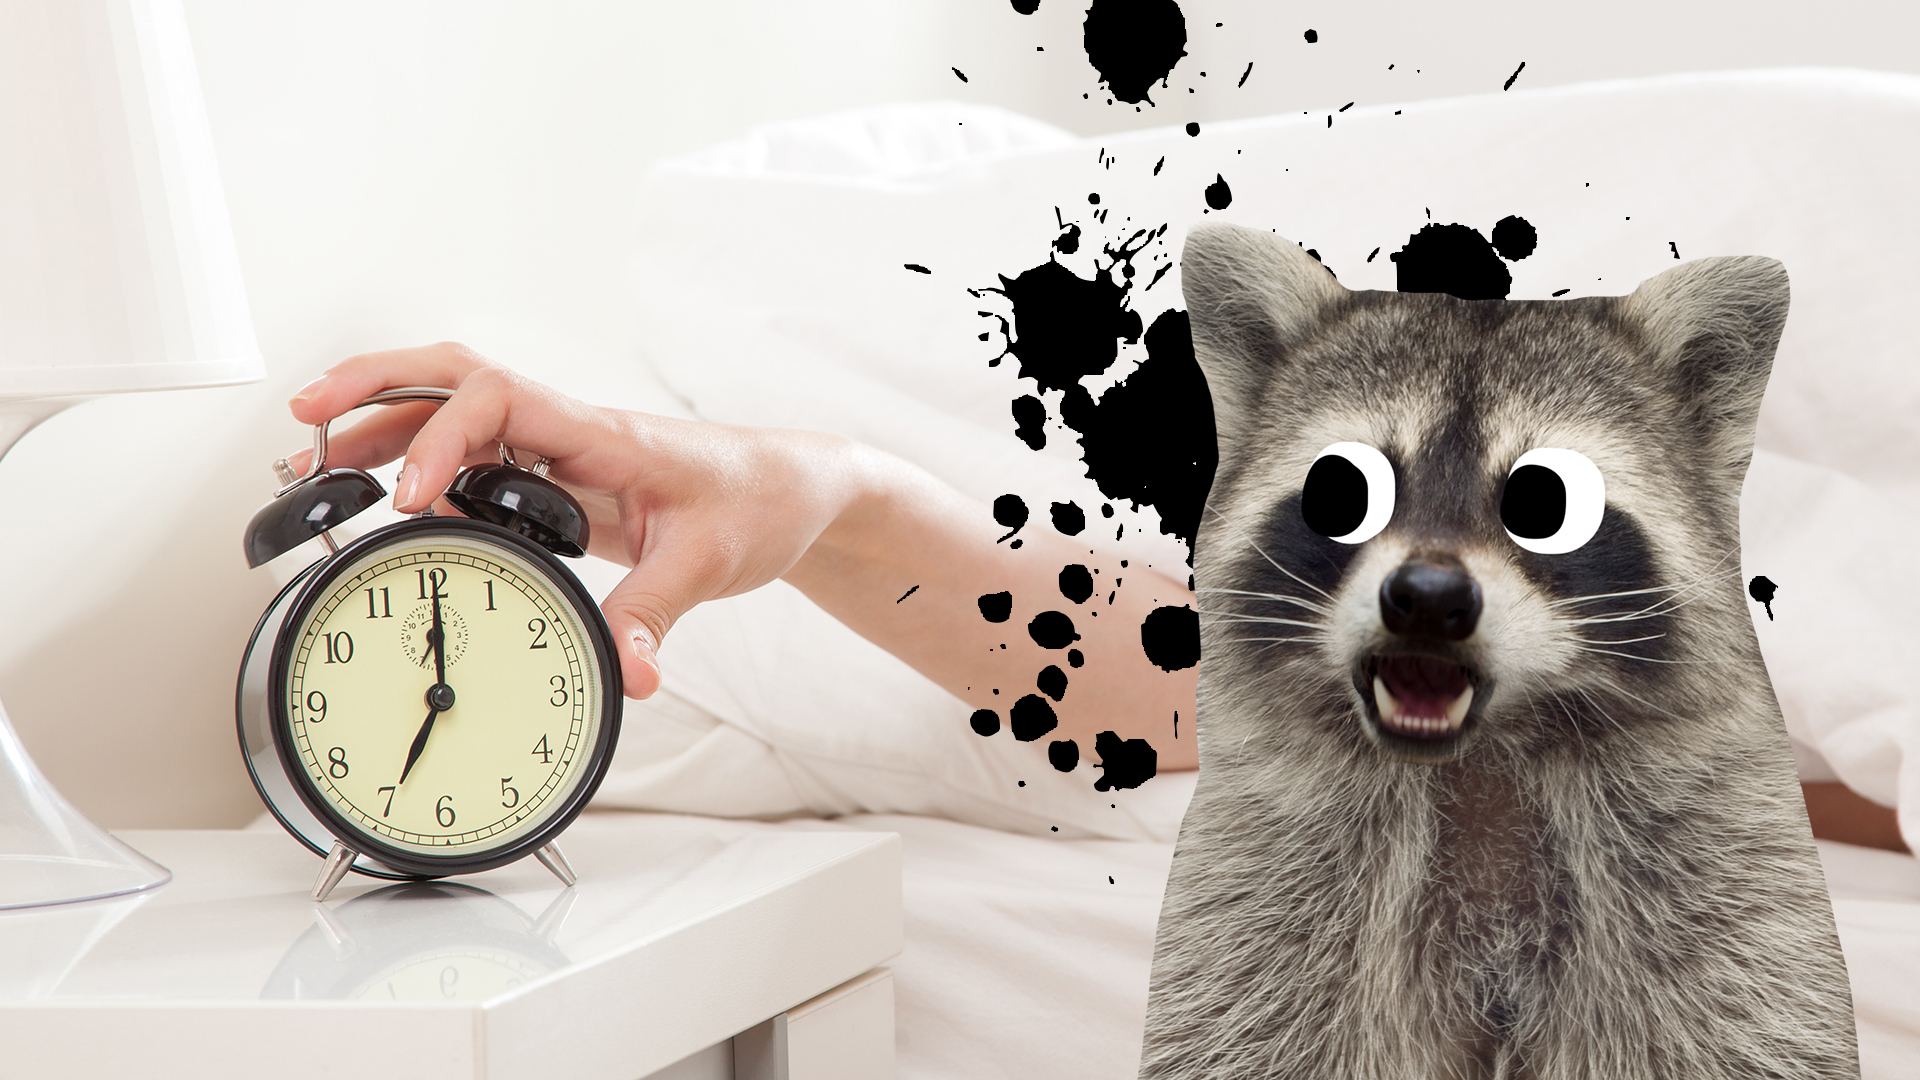 A racoon looks at an alarm clock